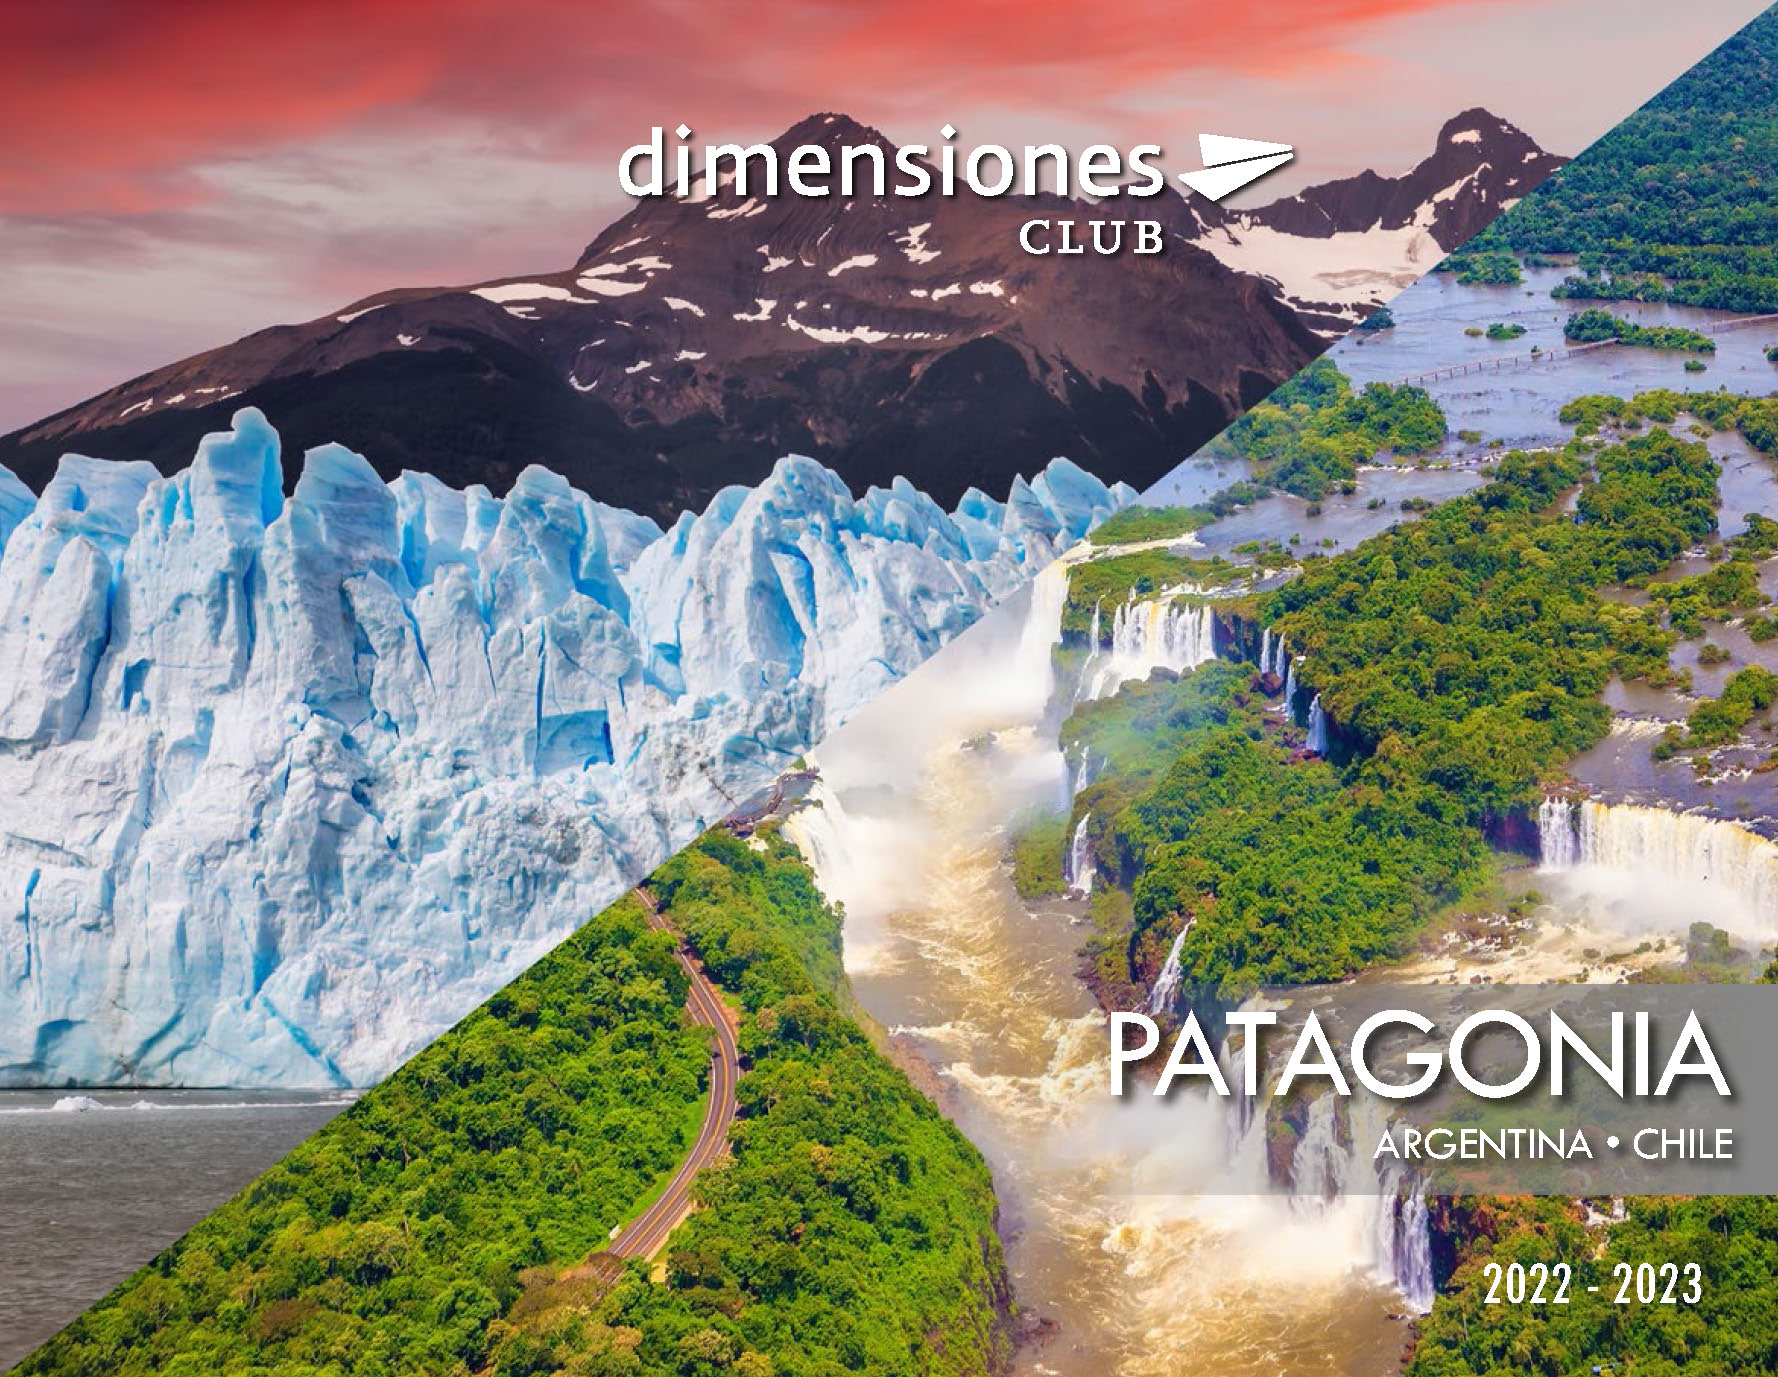 Catalogo Dimensiones Club Patagonia Argentina y Chile 2022-2023